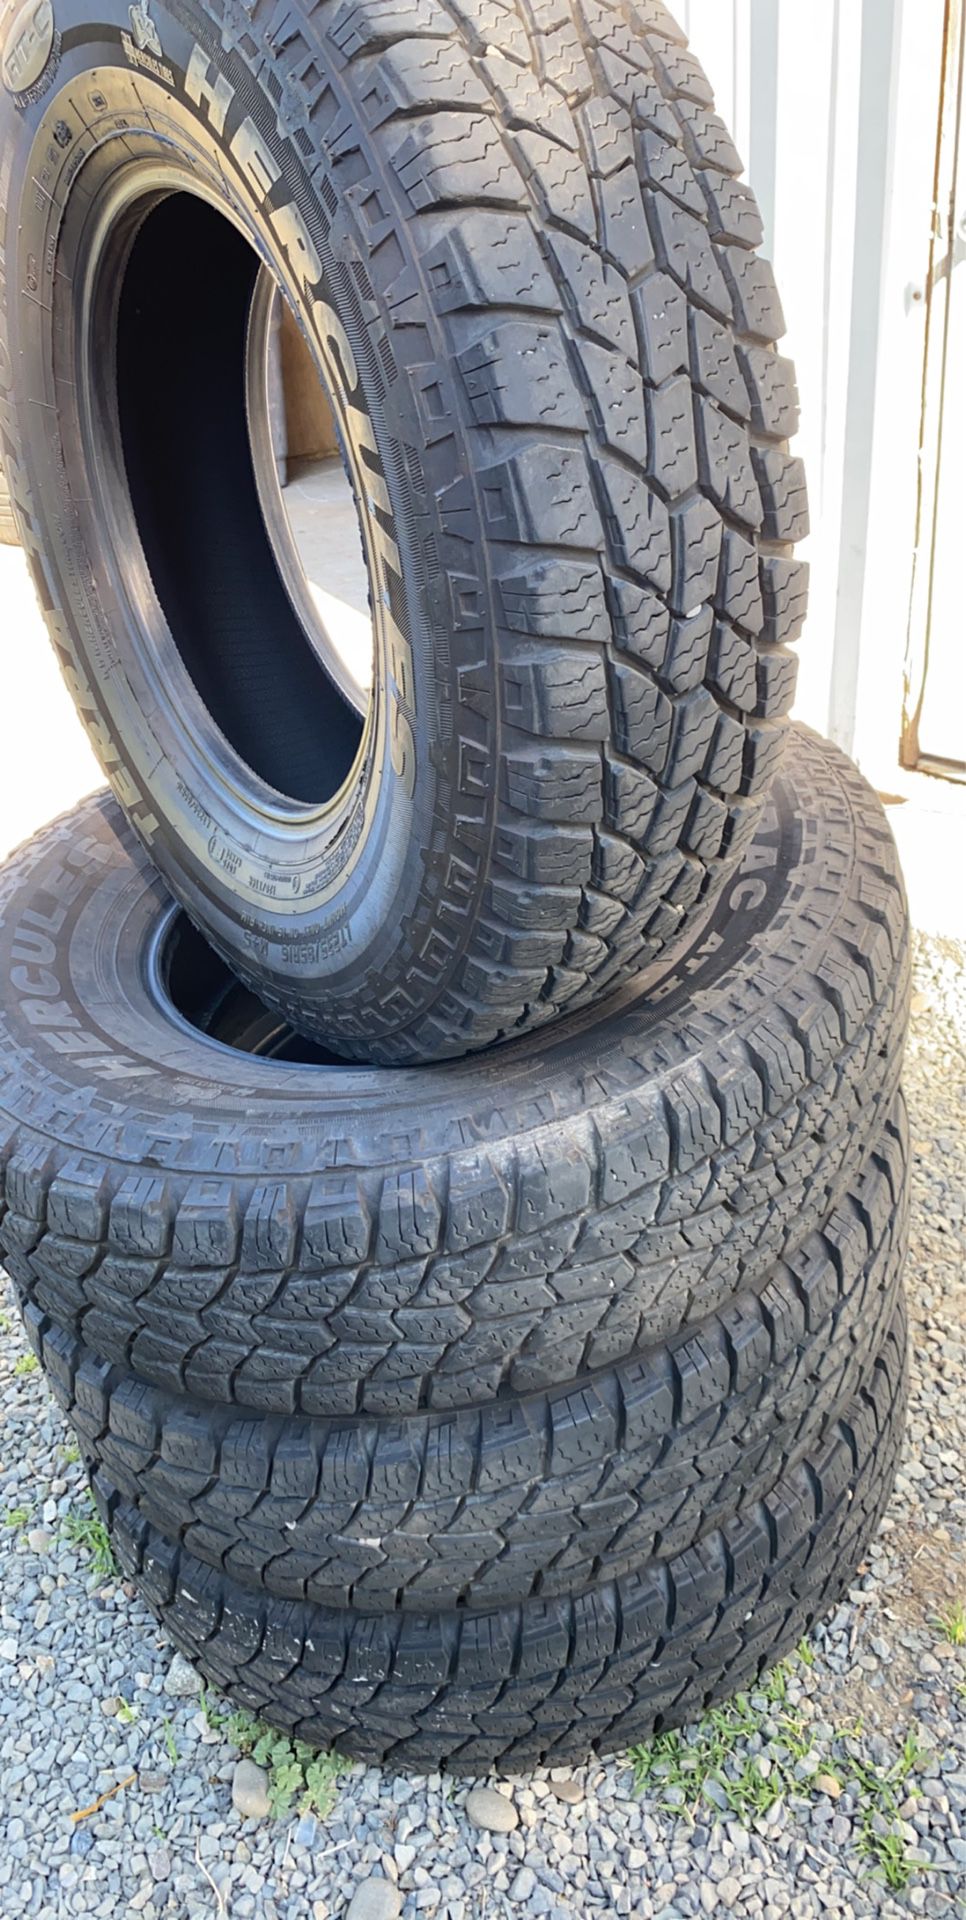 LT235/85/16 Hercules 10ply tires